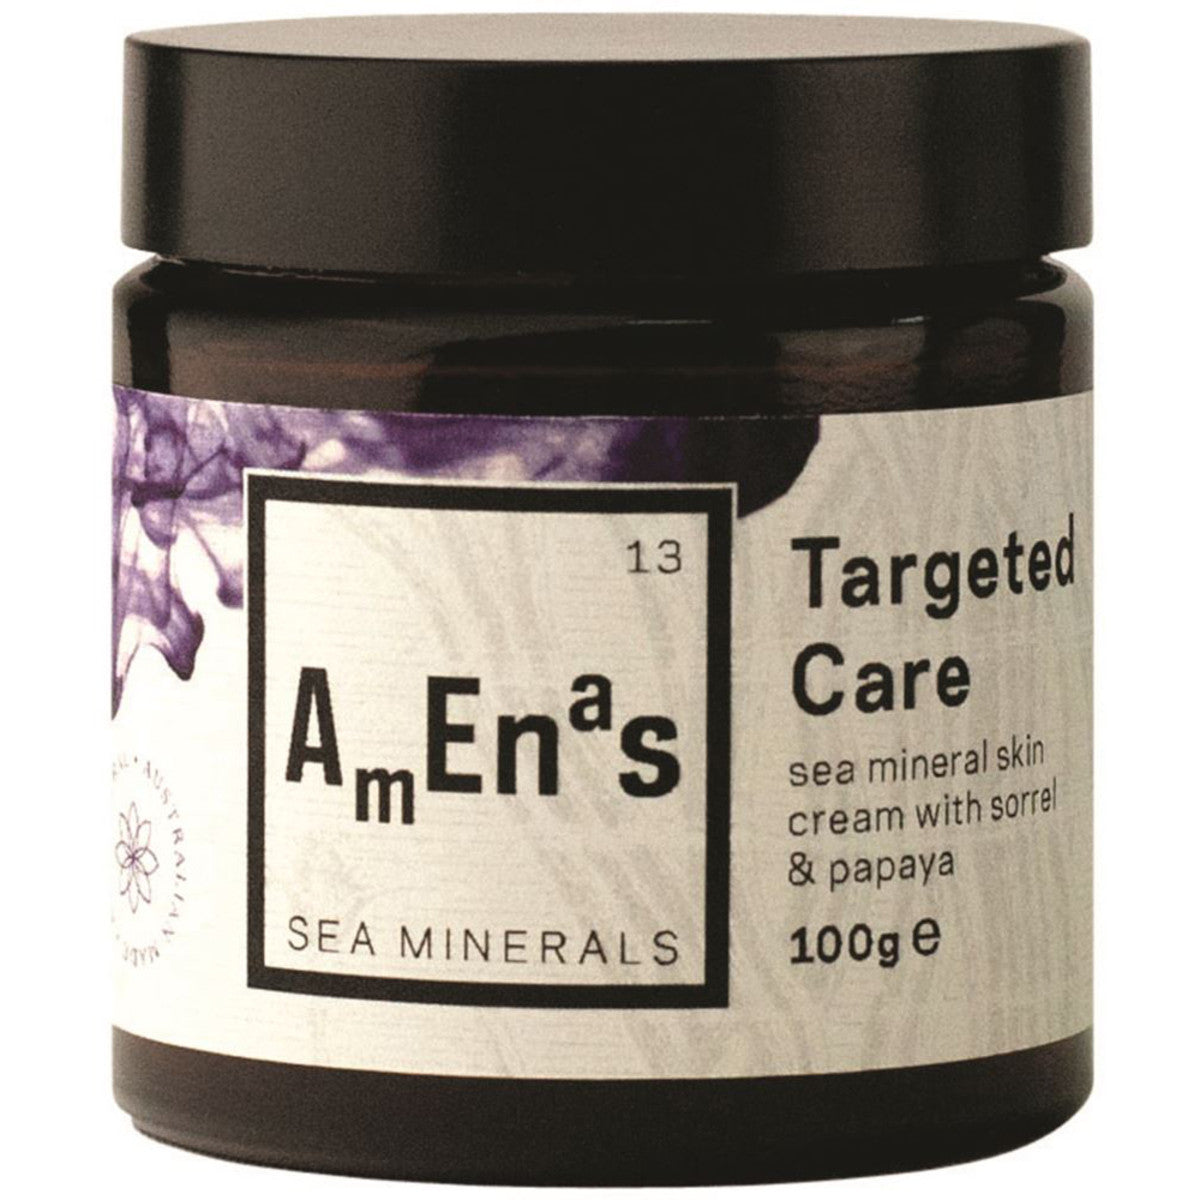 Amenas Sea Minerals - Targeted Care Cream